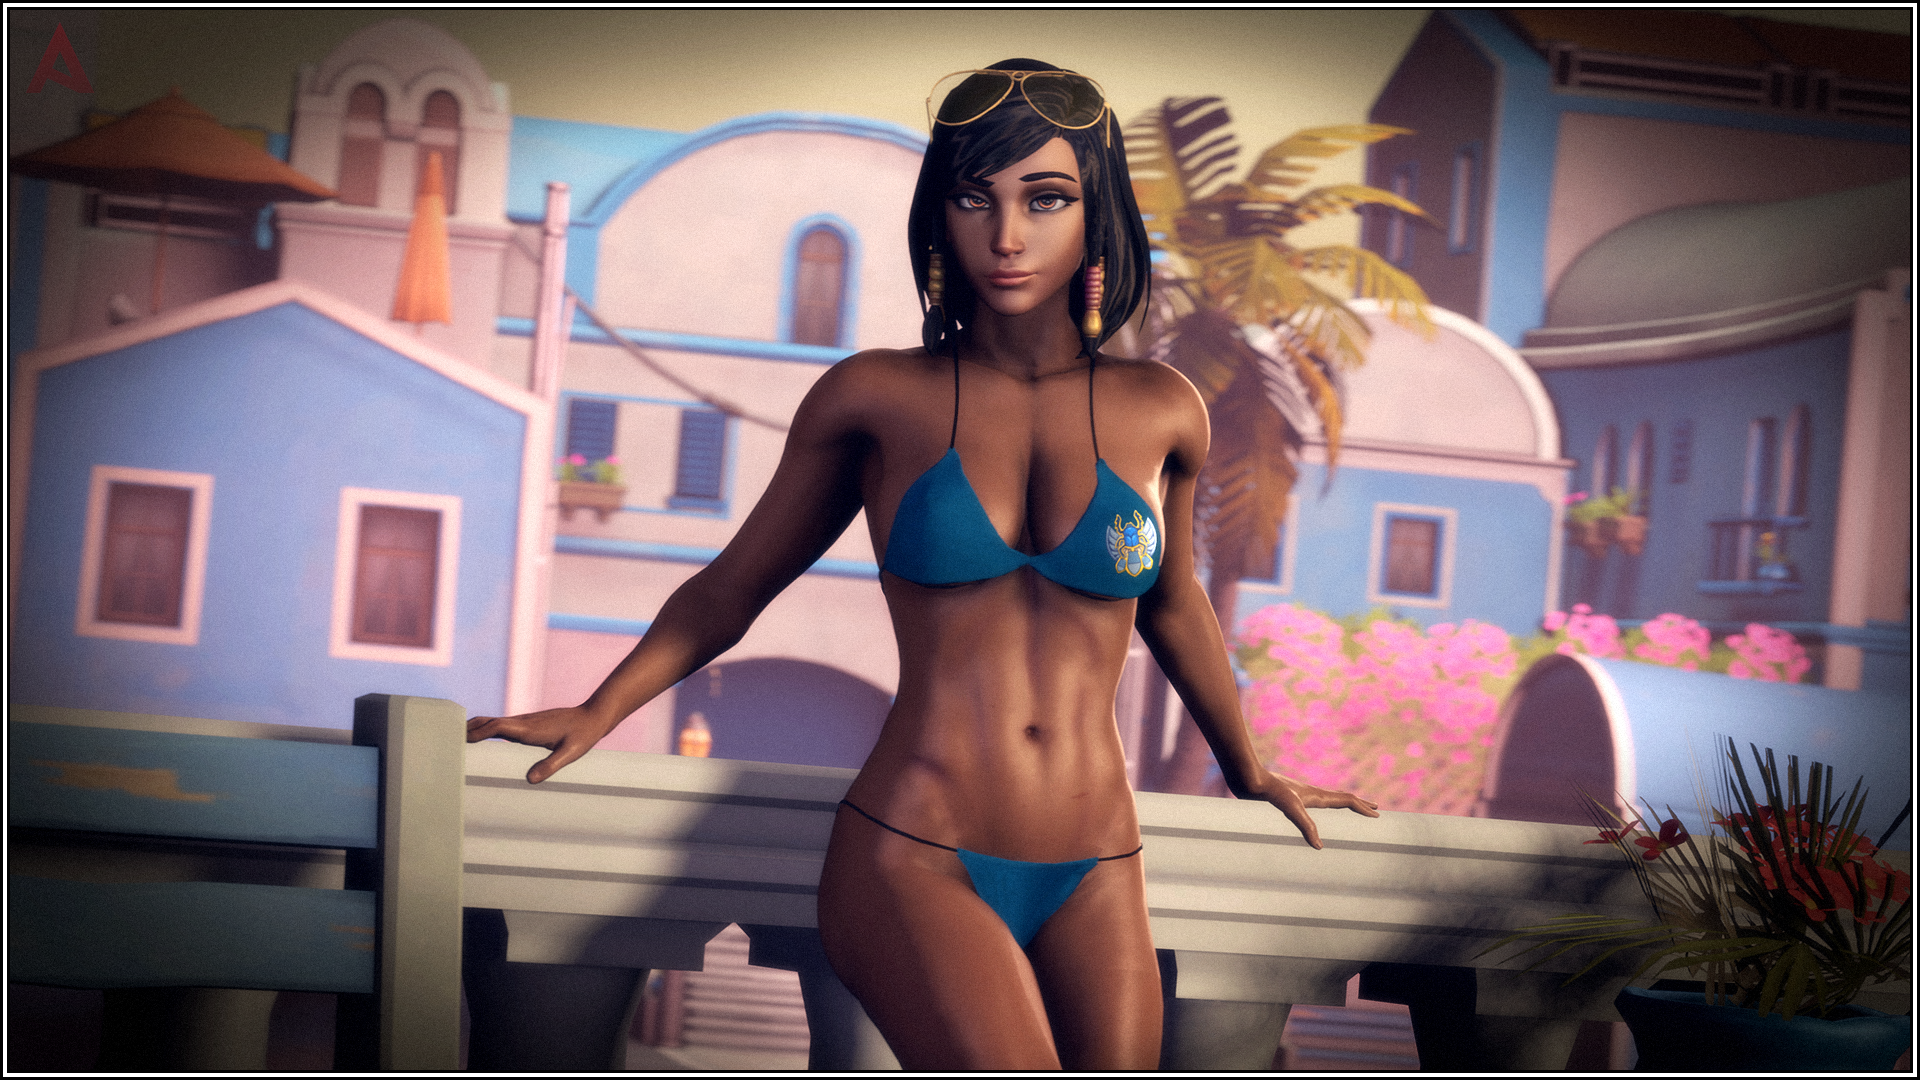 General 1920x1080 Source Filmmaker Overwatch Pharah (Overwatch) bikini sunglasses video game characters digital art